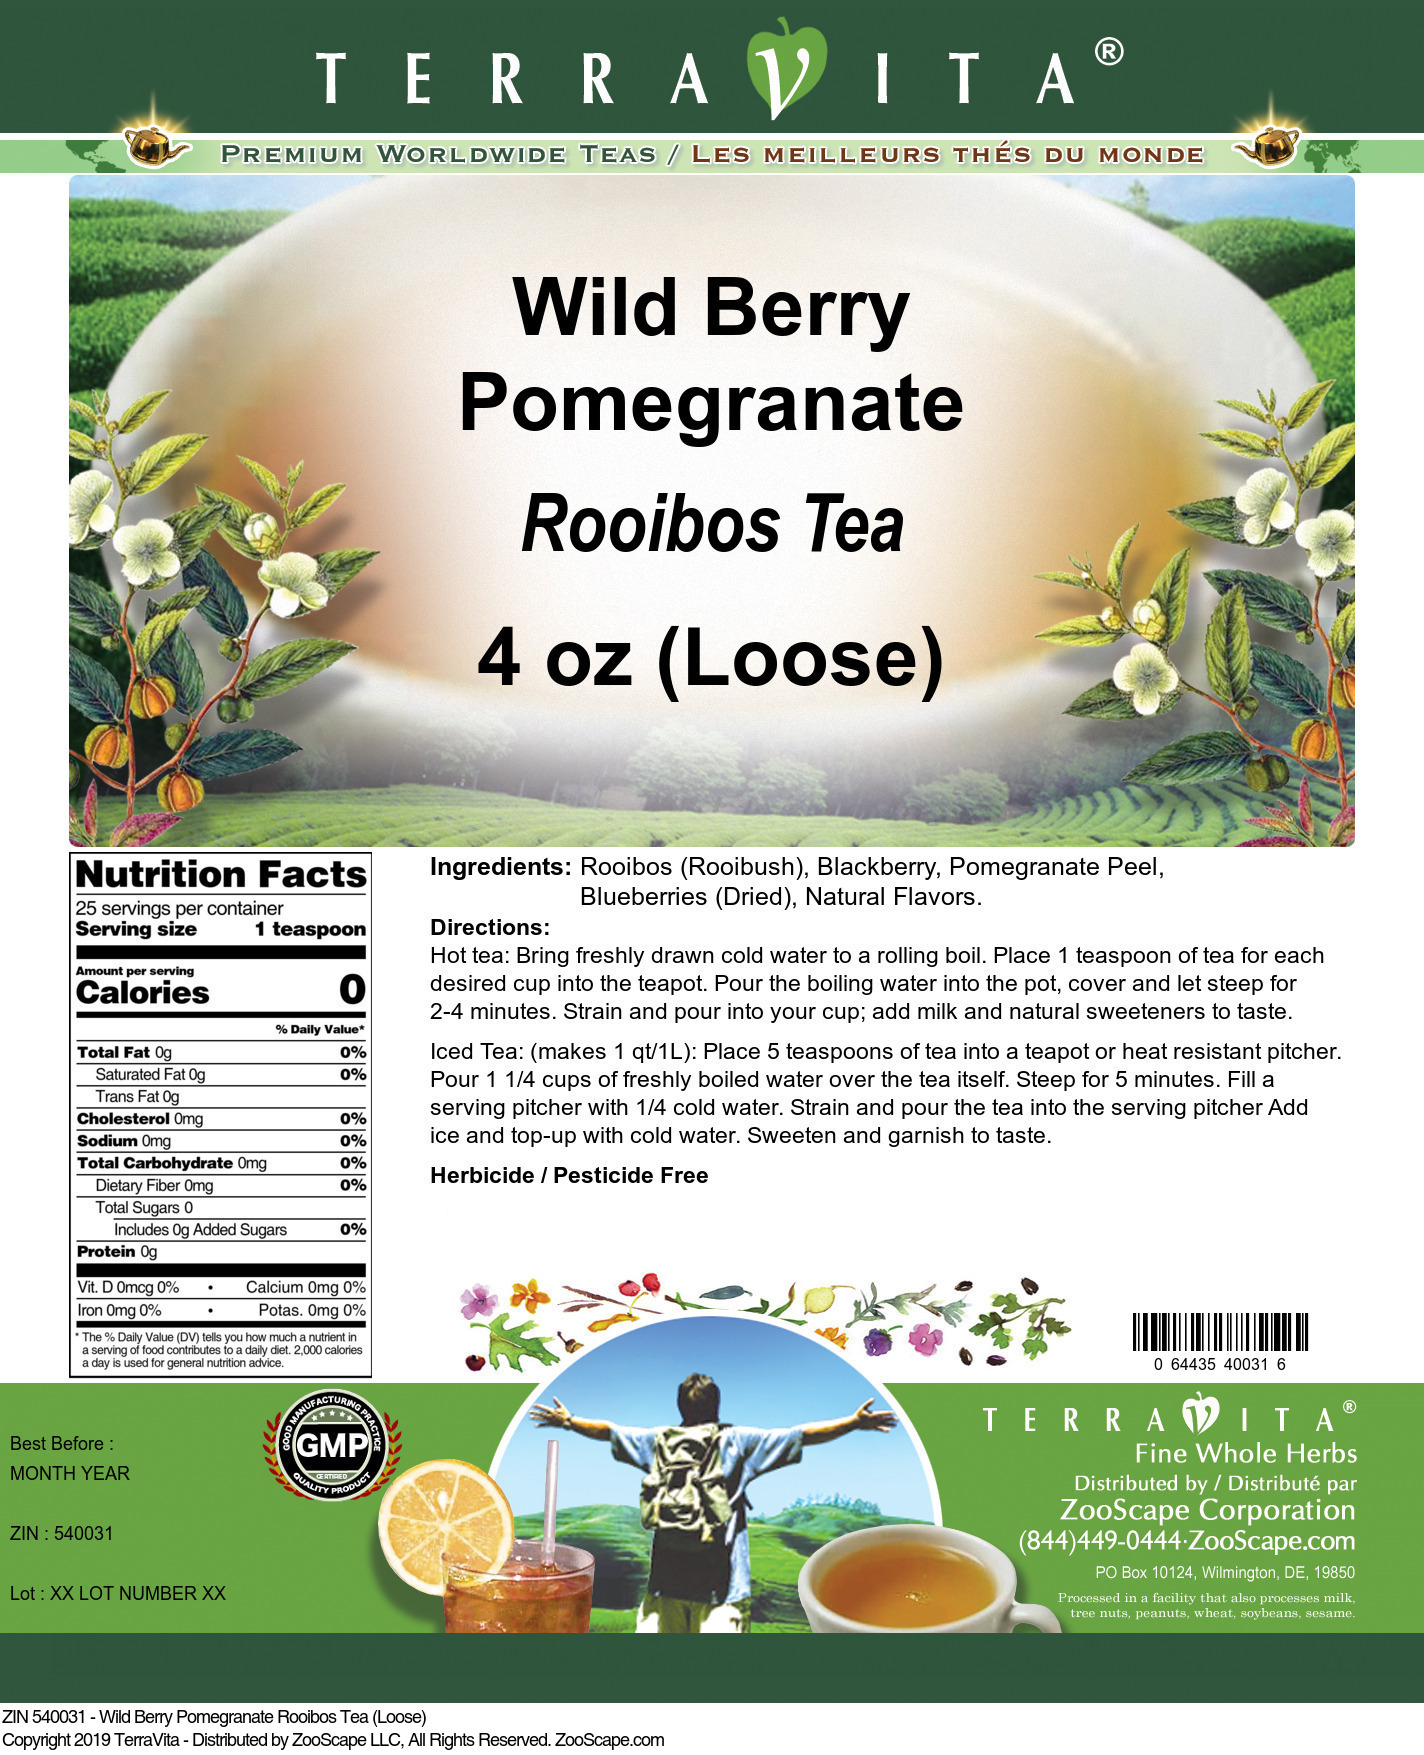 Wild Berry Pomegranate Rooibos Tea (Loose) - Label